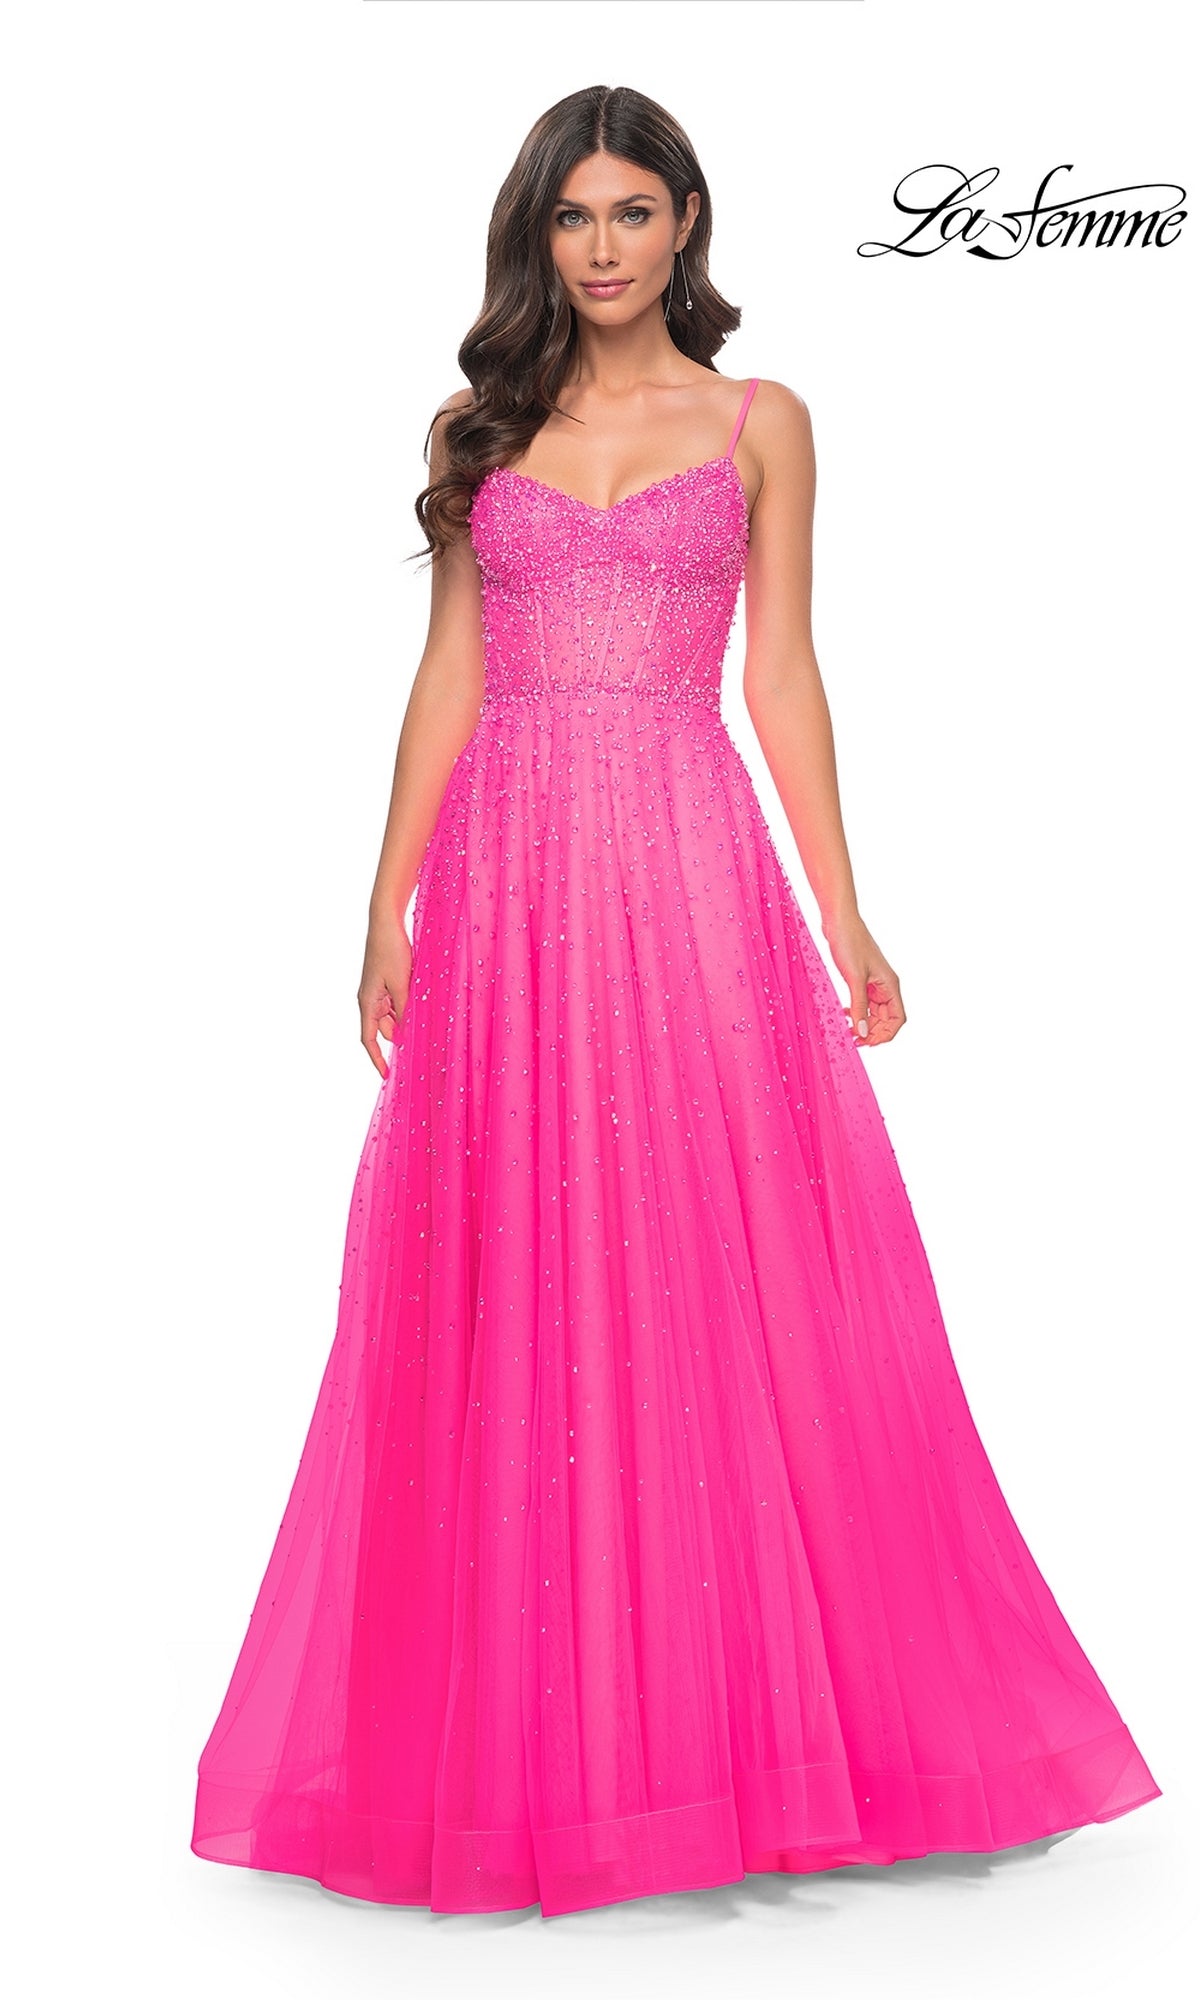 La Femme 32146 Long Prom Dress - PromGirl